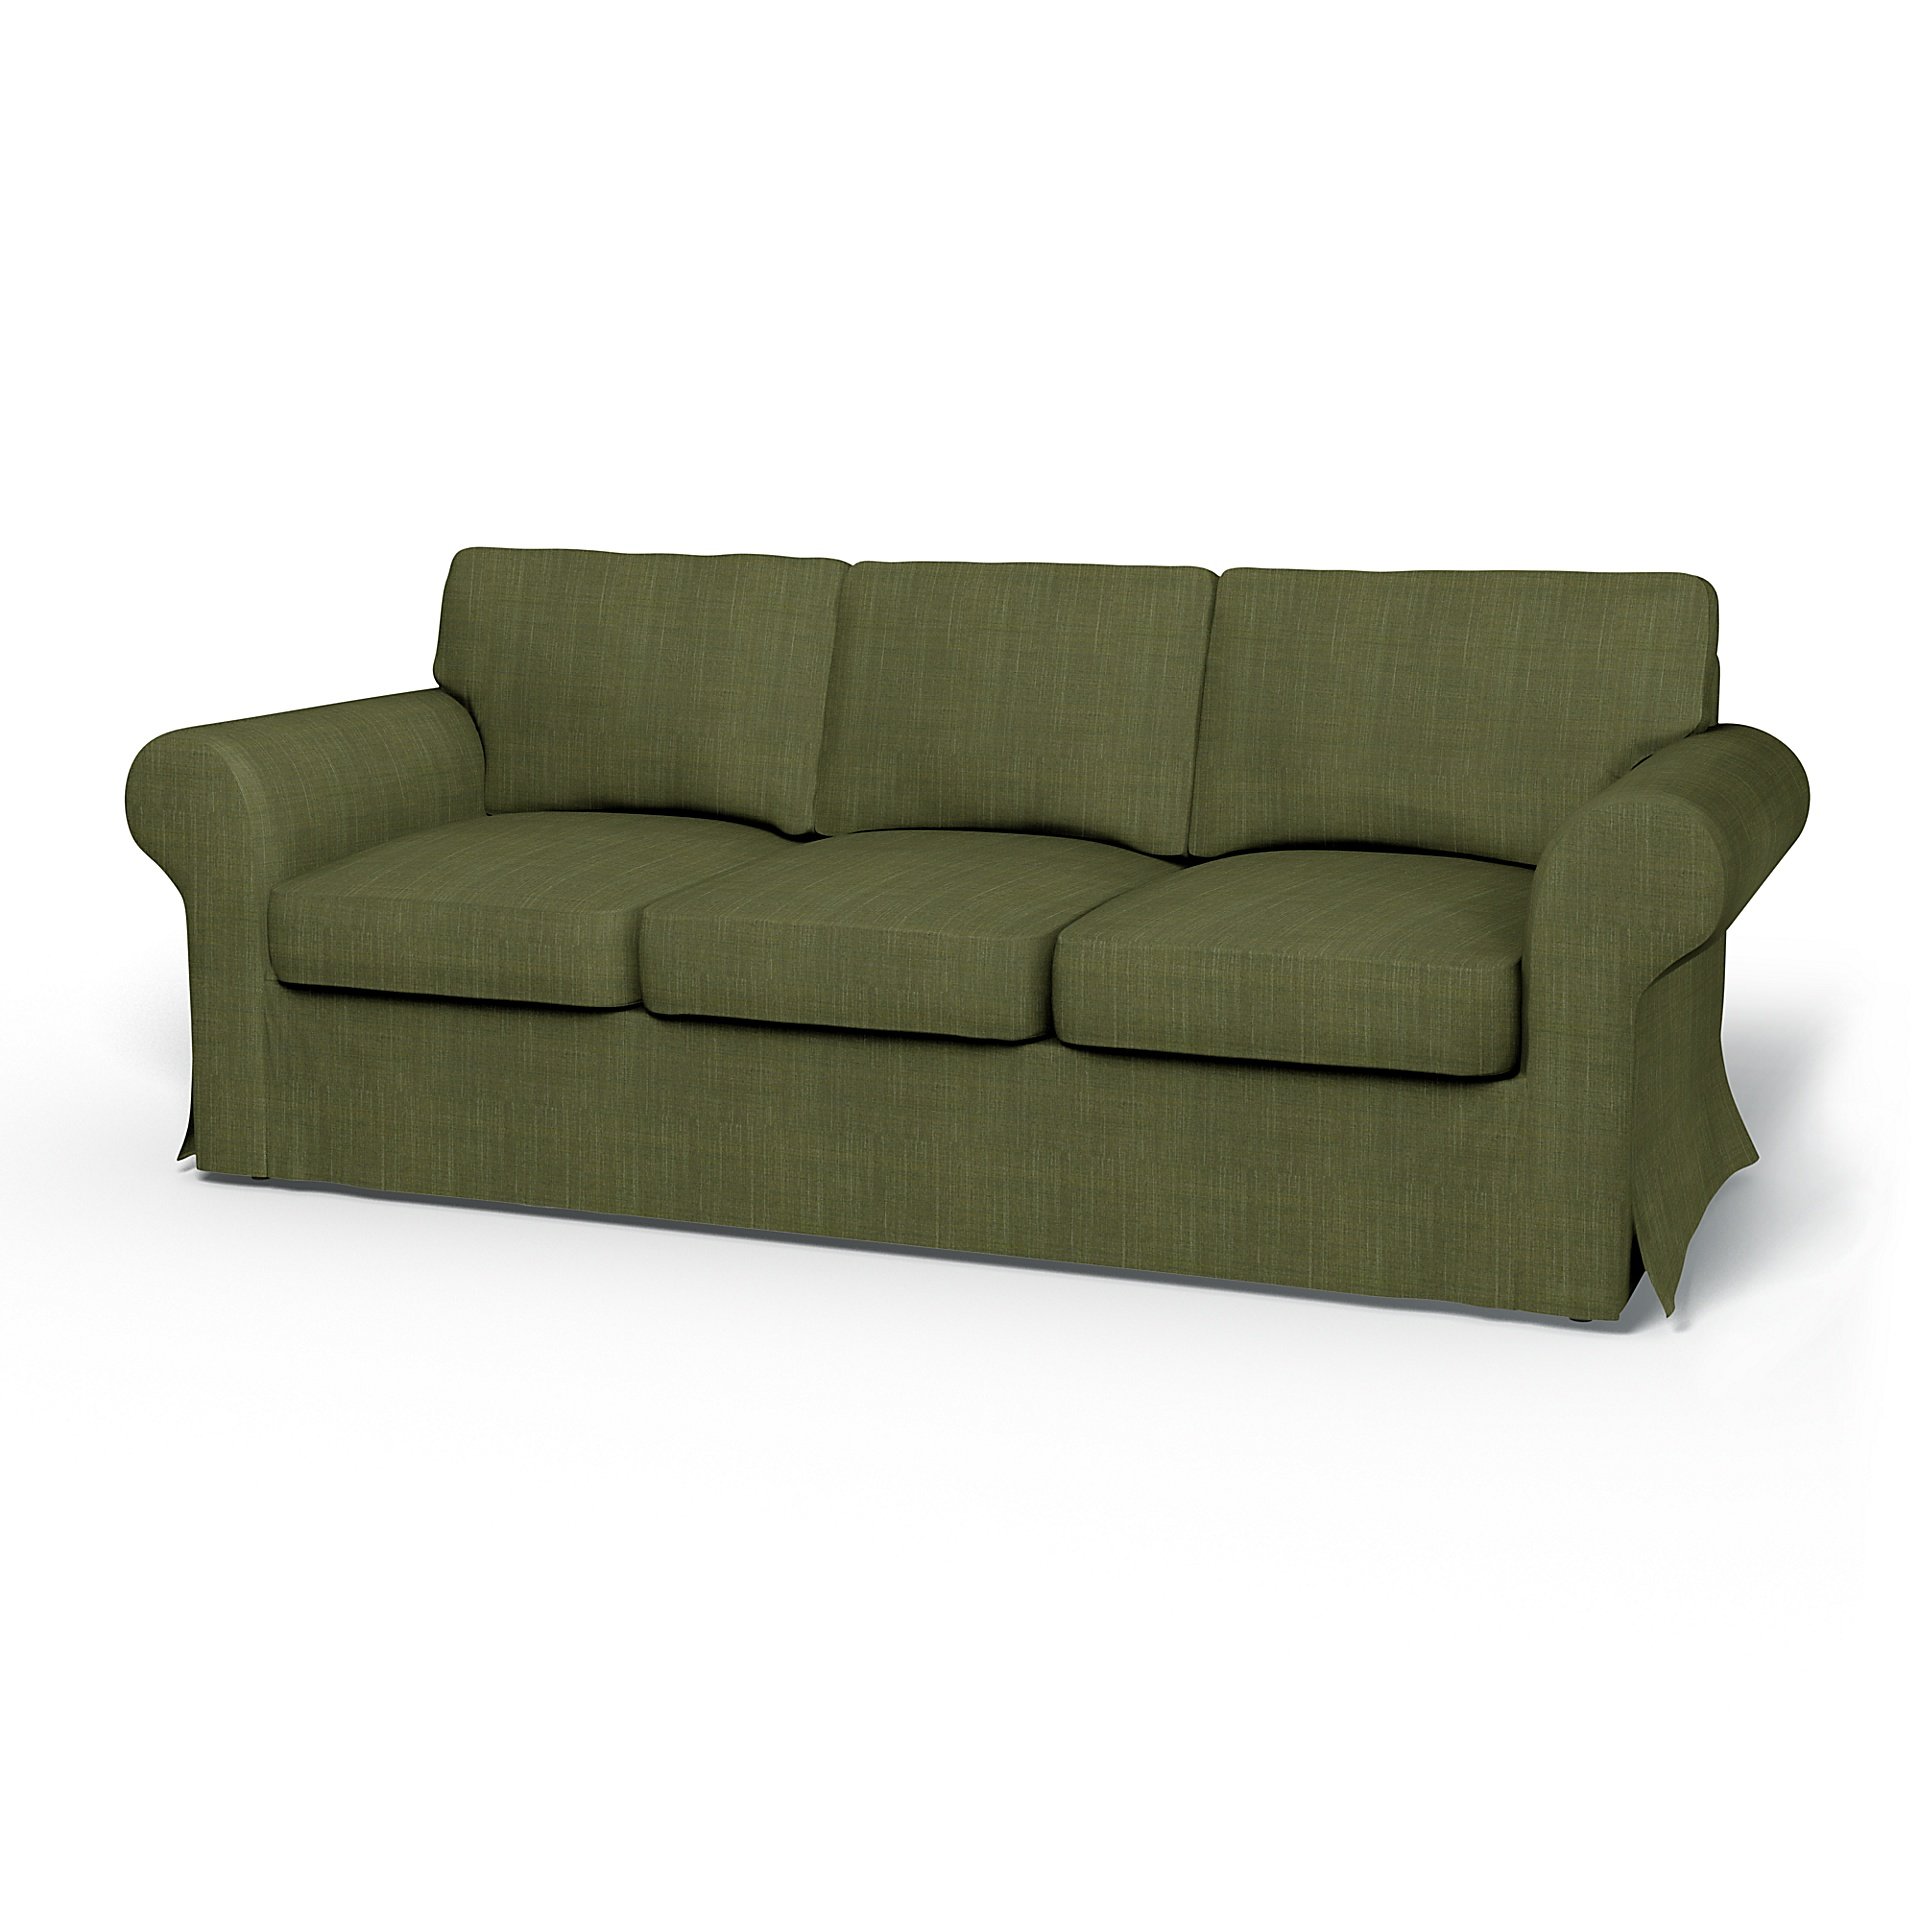 IKEA - Ektorp 3 Seater Sofa Bed Cover, Moss Green, Boucle & Texture - Bemz